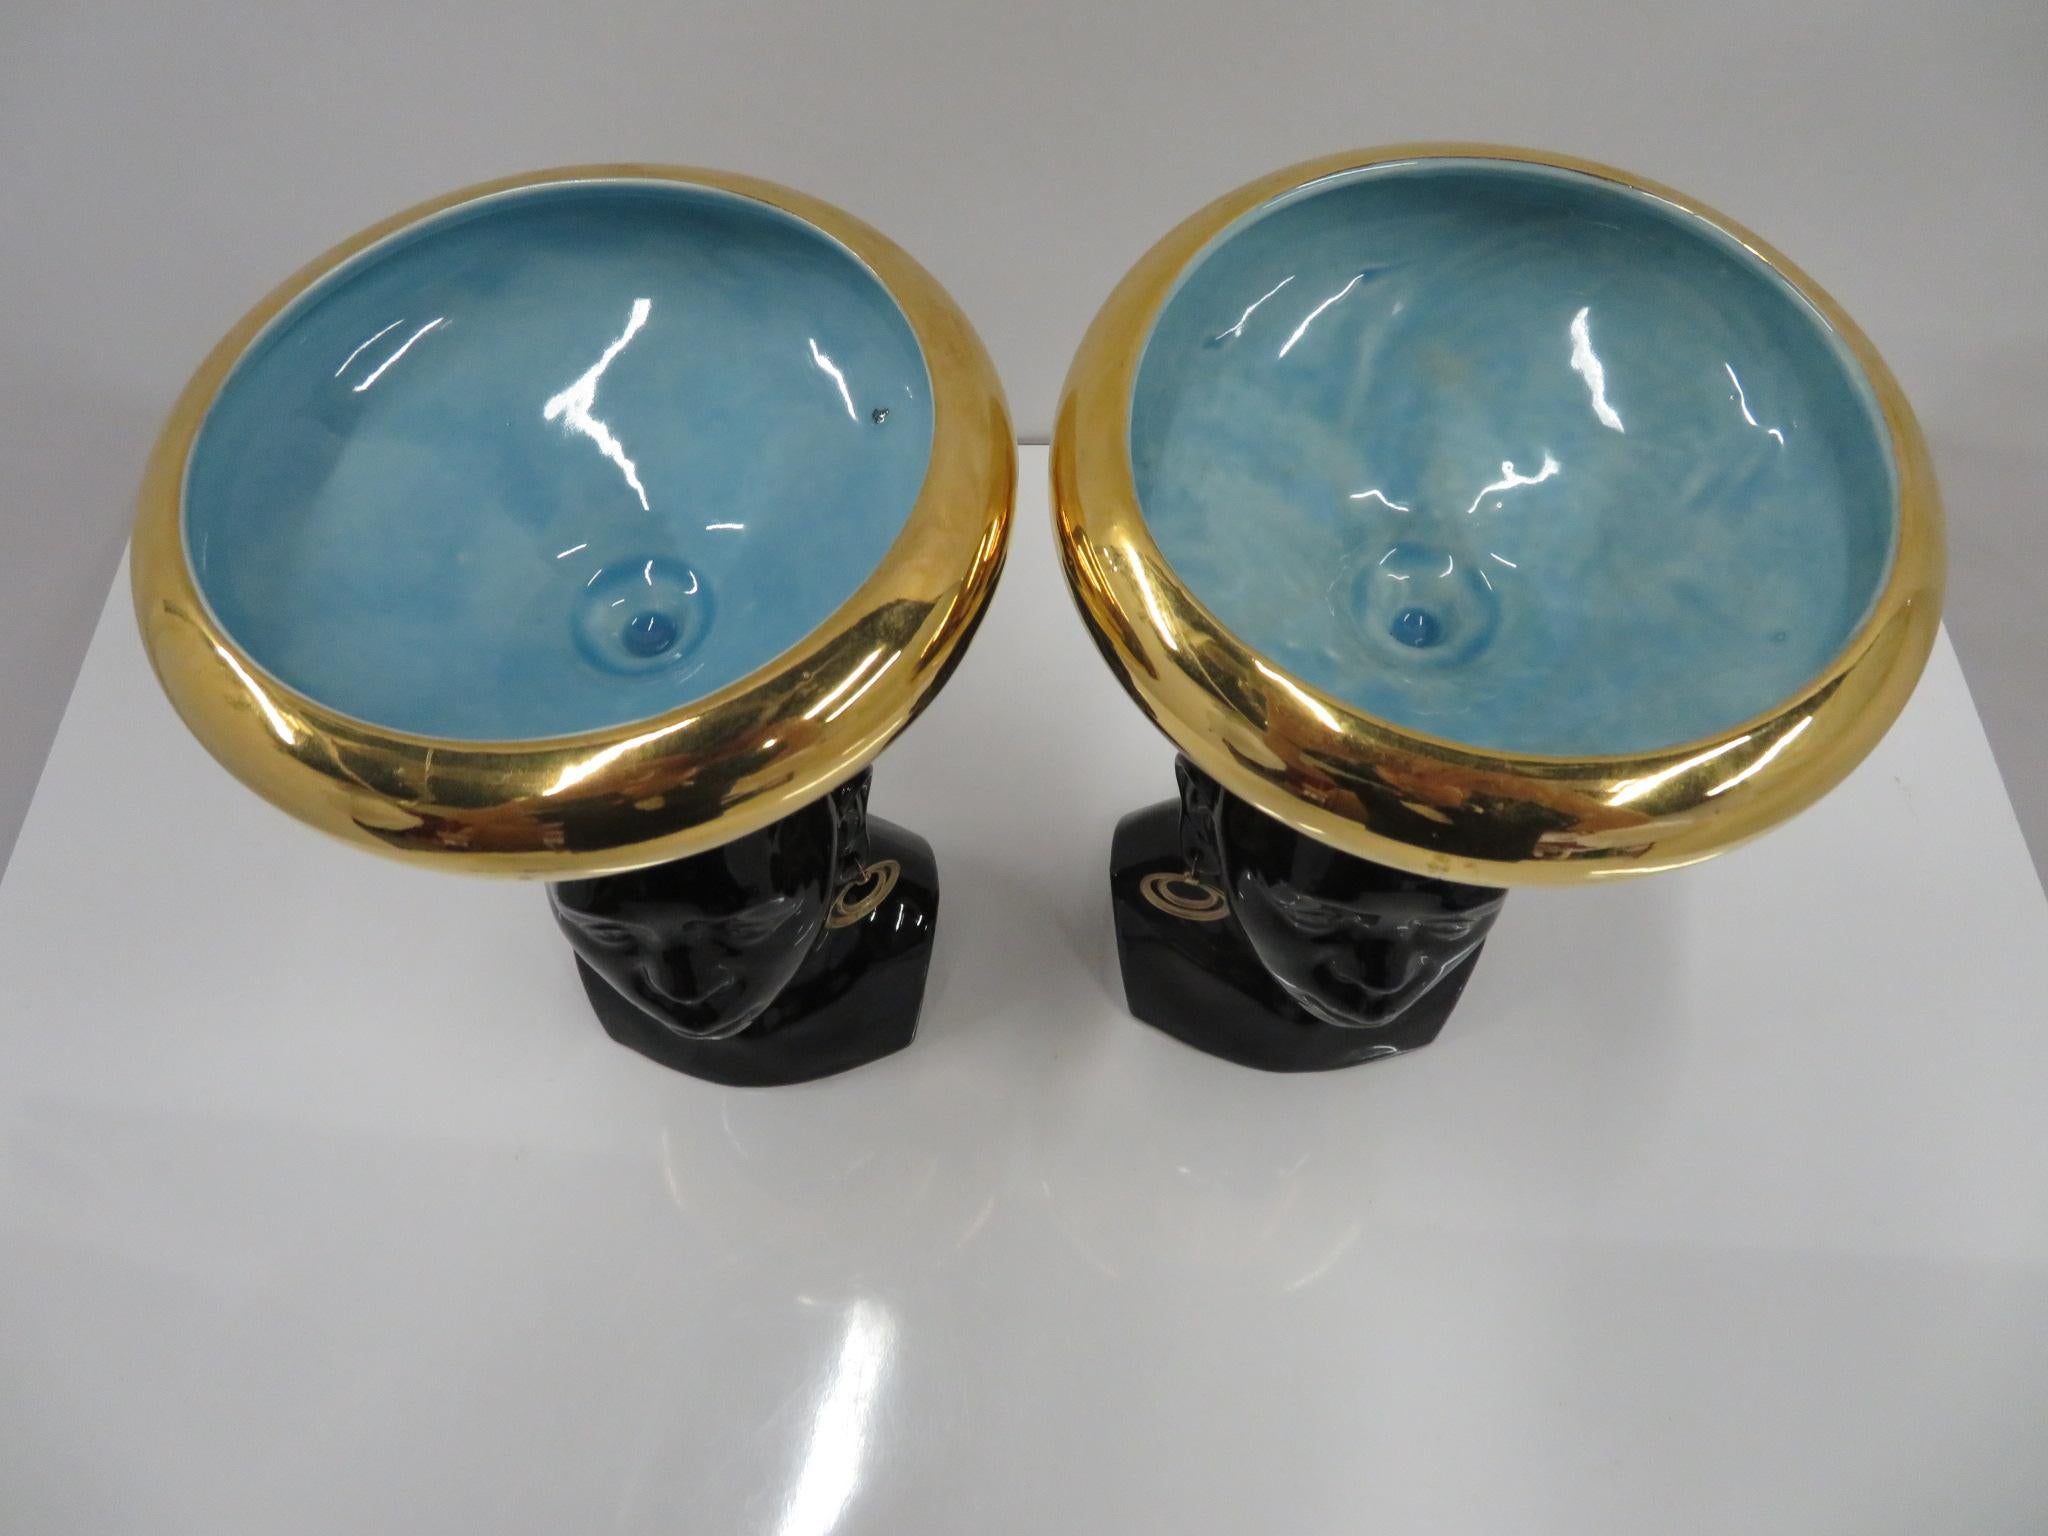 Glazed Mid-Century Modern Ceramic Gilt Bowls Busts of Nubian Princesses, 1950s For Sale